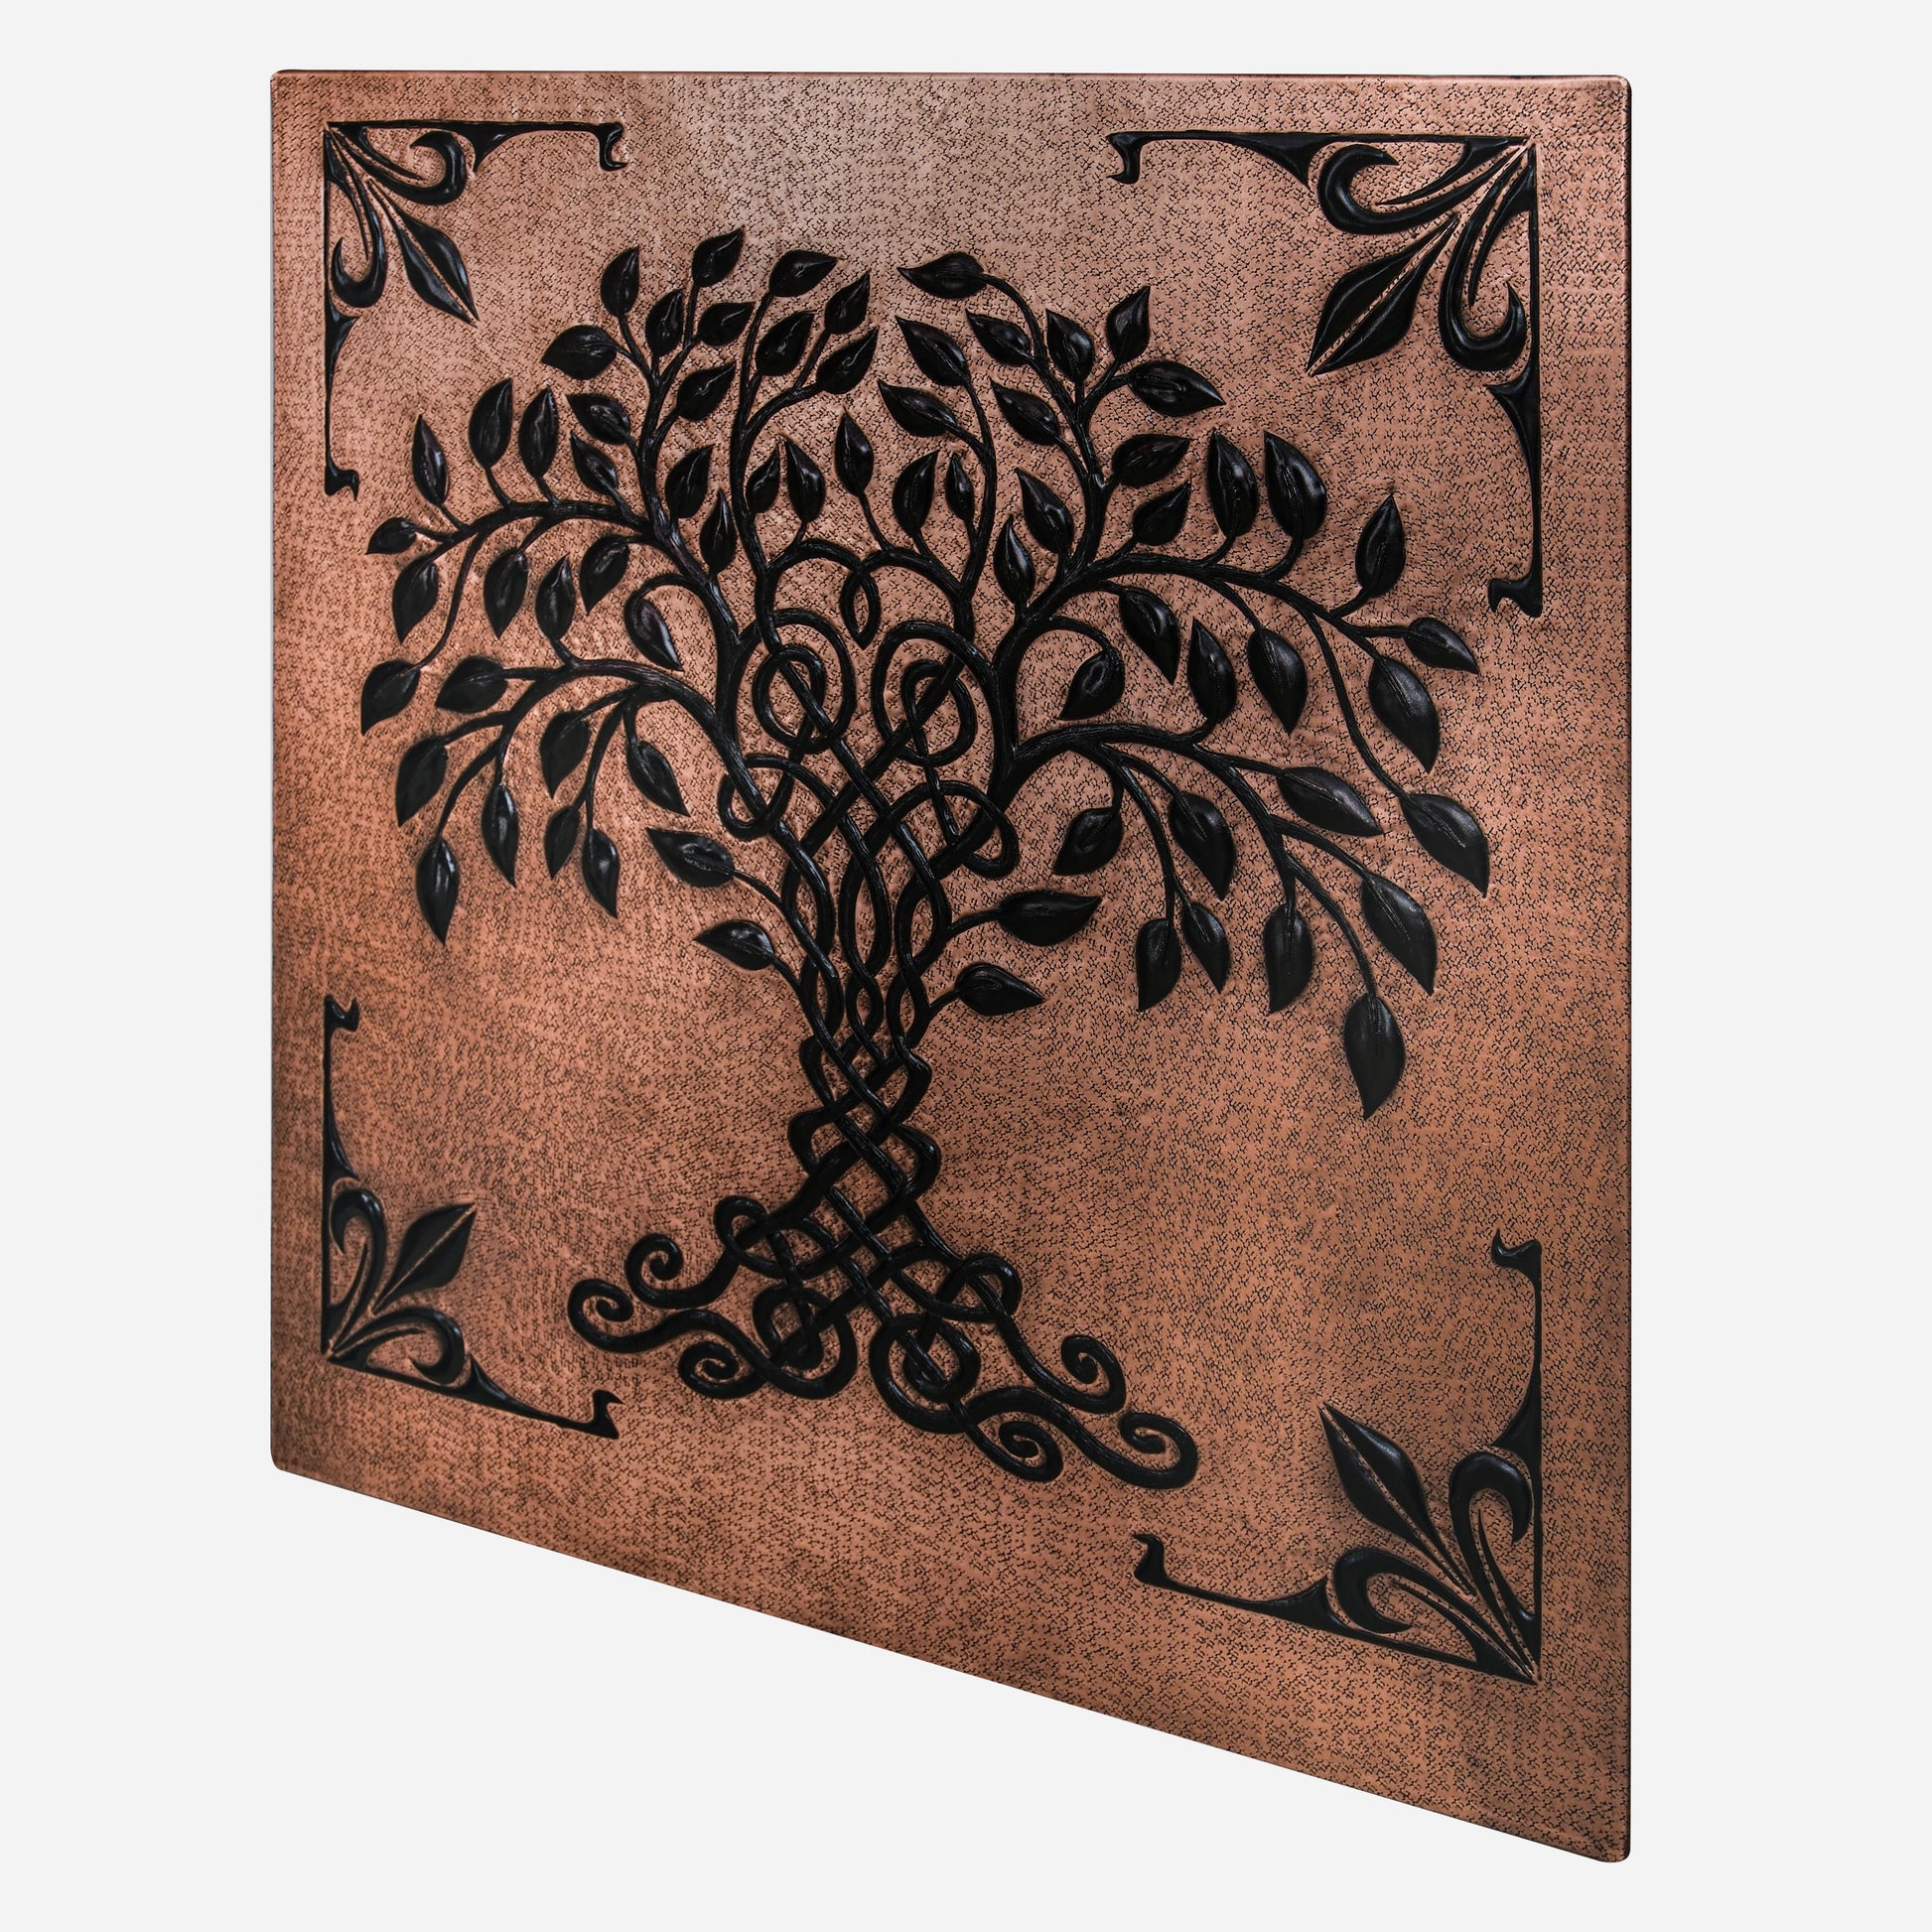 Copper Backsplash Panel (Celtic Tree of Life with Fleur de Lis Border, Copper&Black Color)